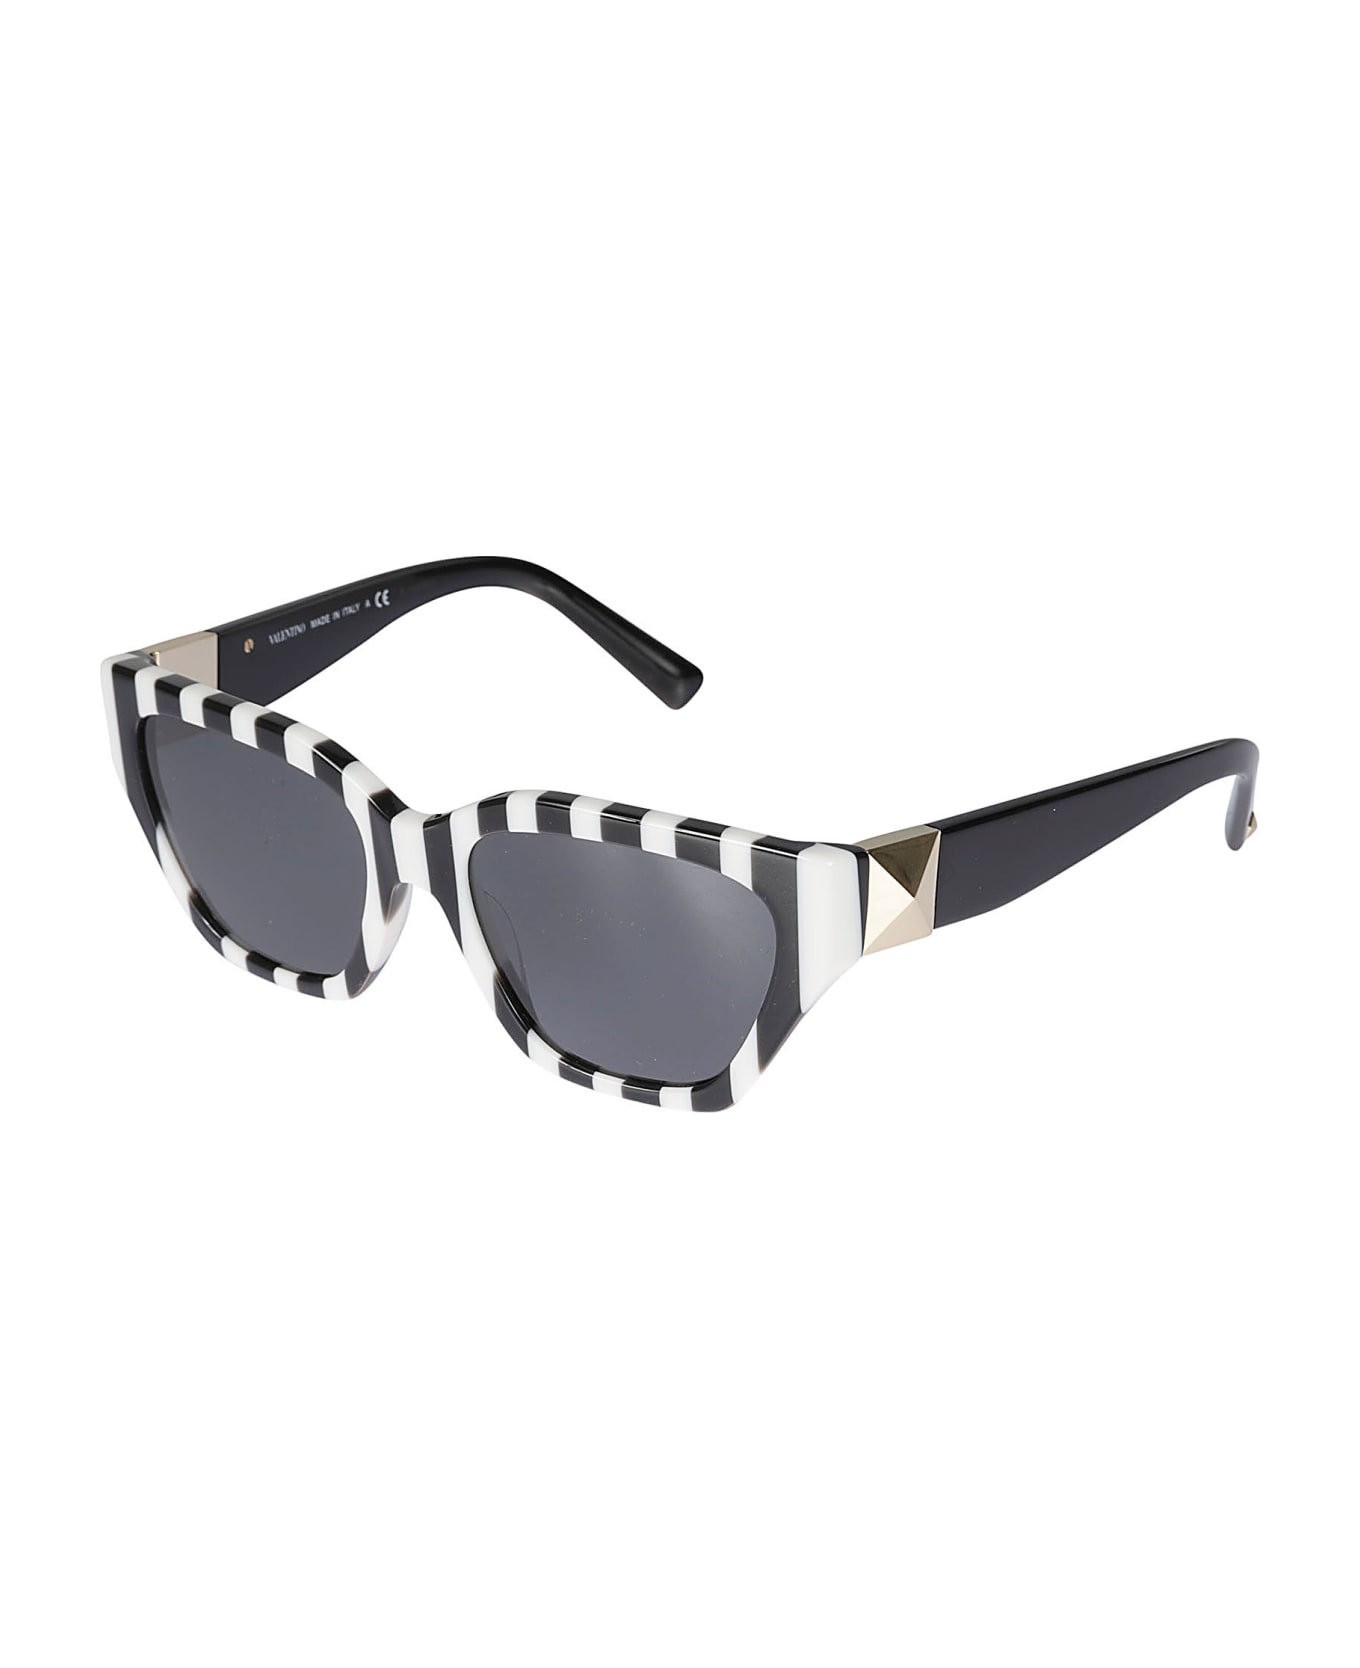 Valentino Eyewear Sole518187 Sunglasses - 518187